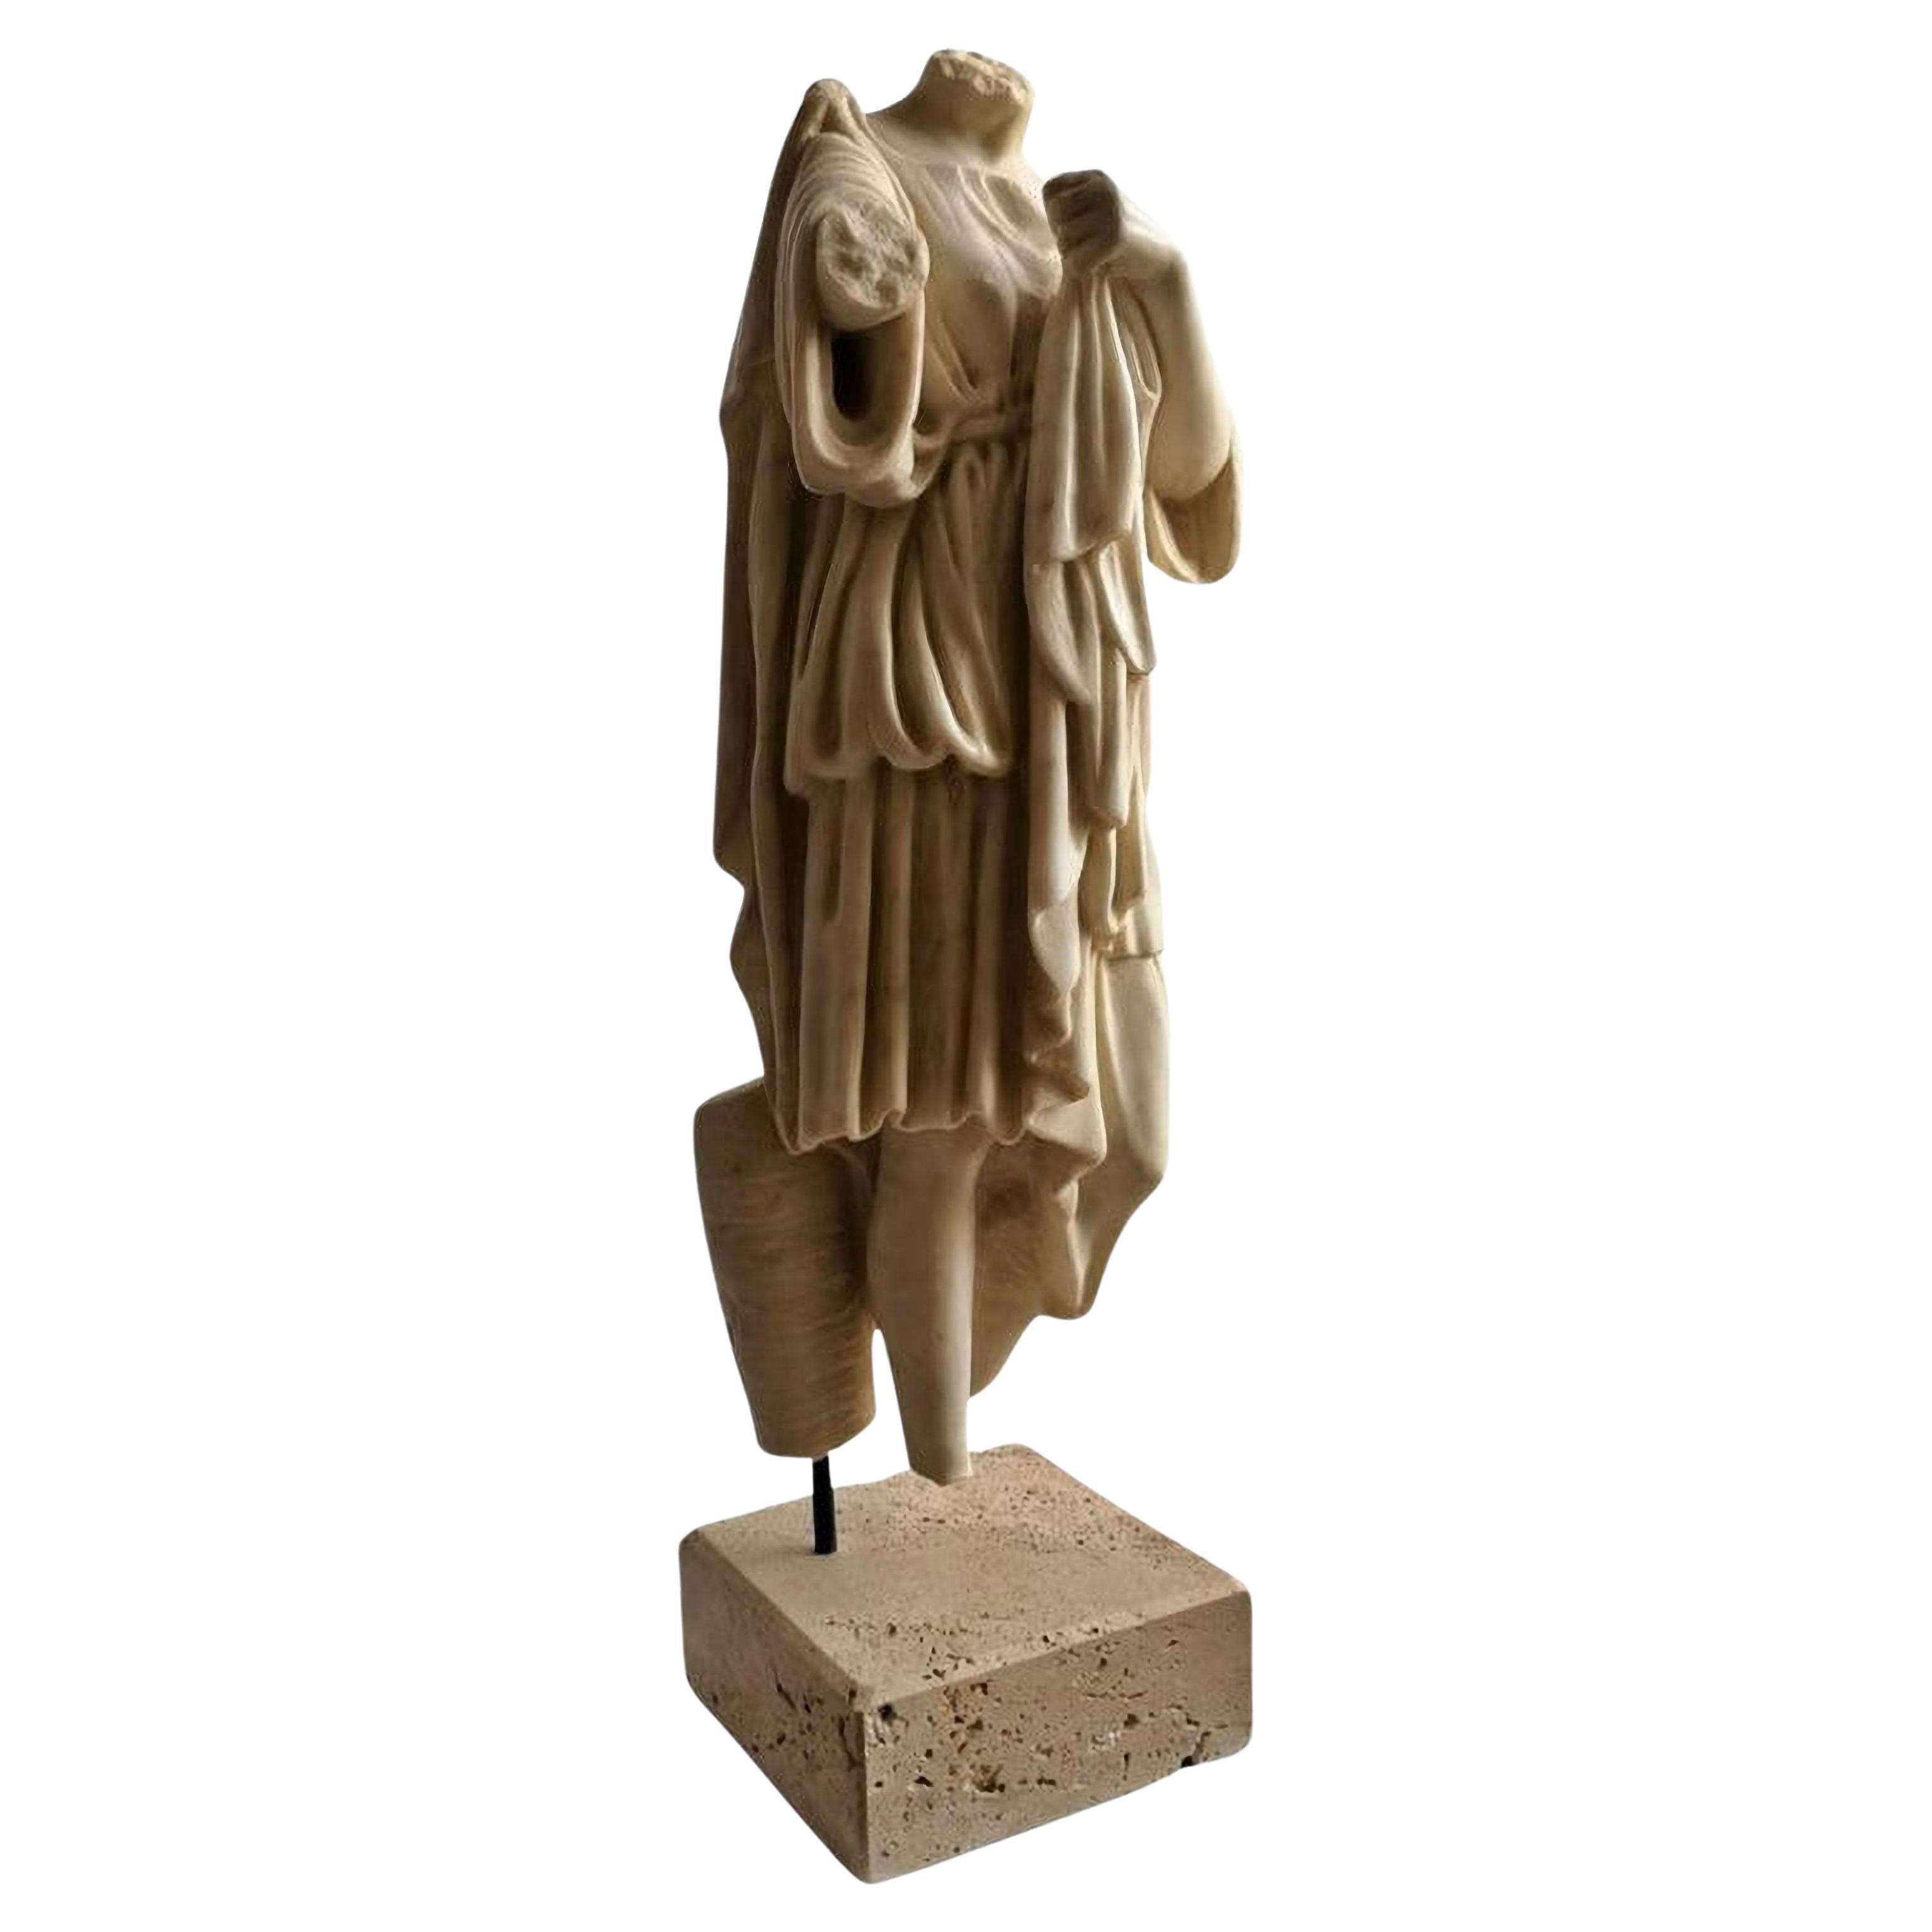 Italian Sculpture "Venus Gabi" Headless Torso Early 20th Century Carrara Marble For Sale